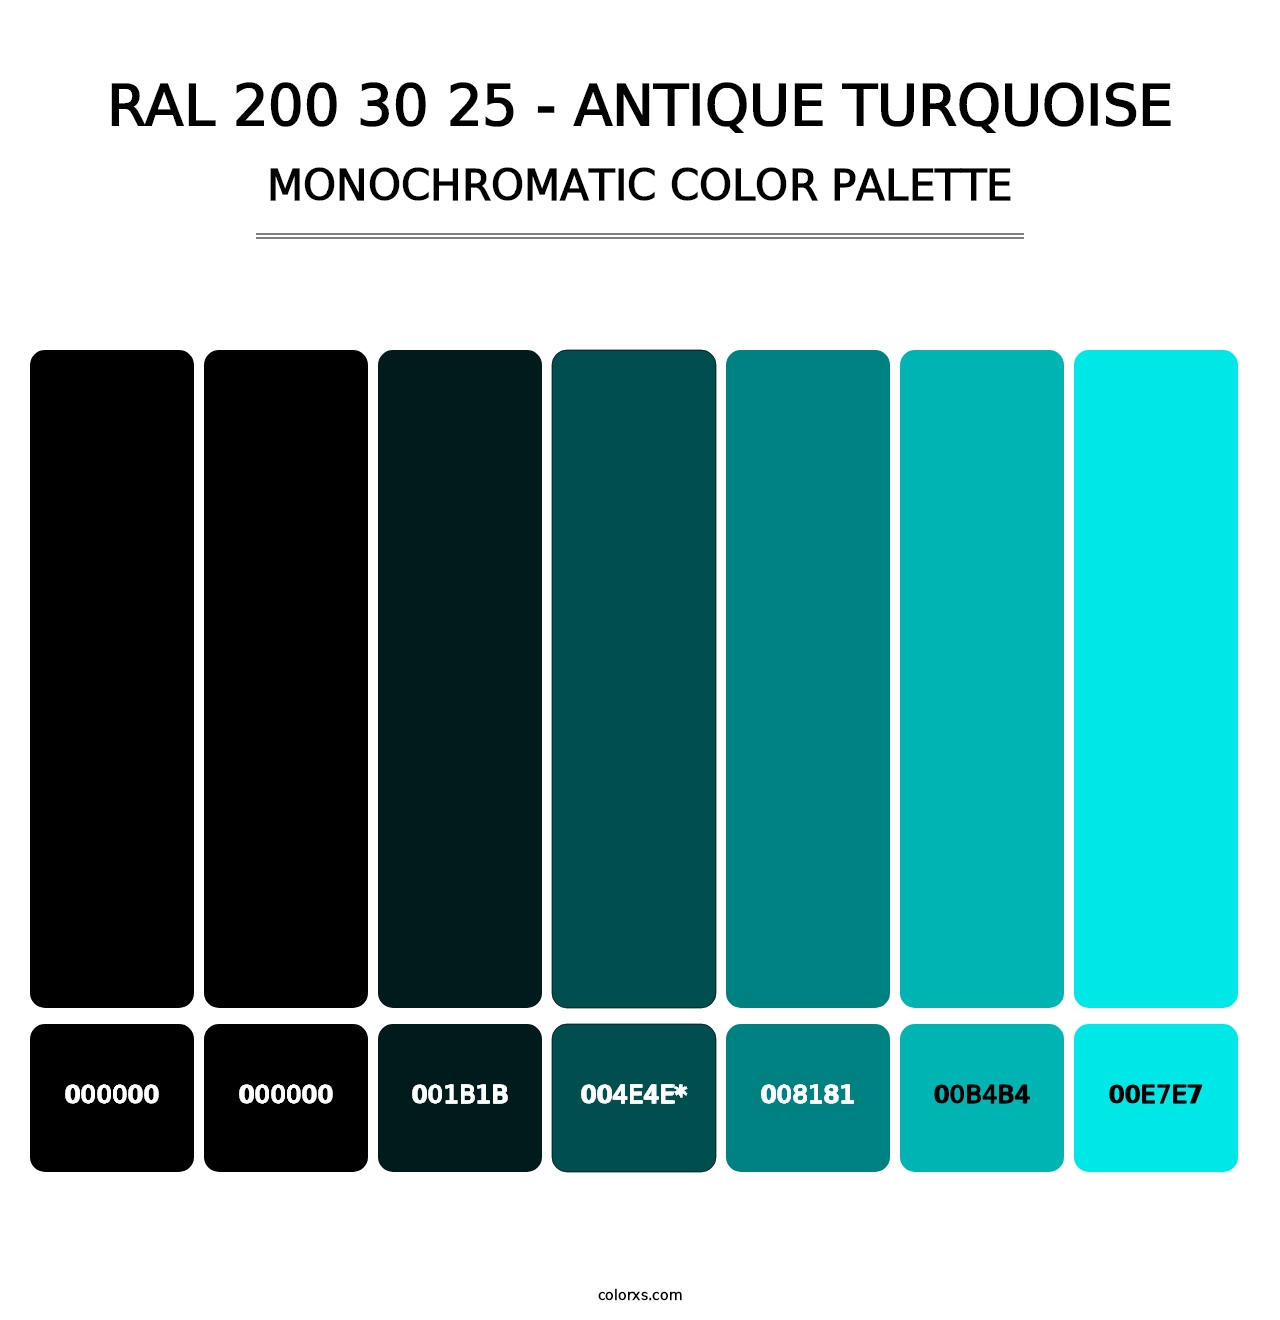 RAL 200 30 25 - Antique Turquoise - Monochromatic Color Palette